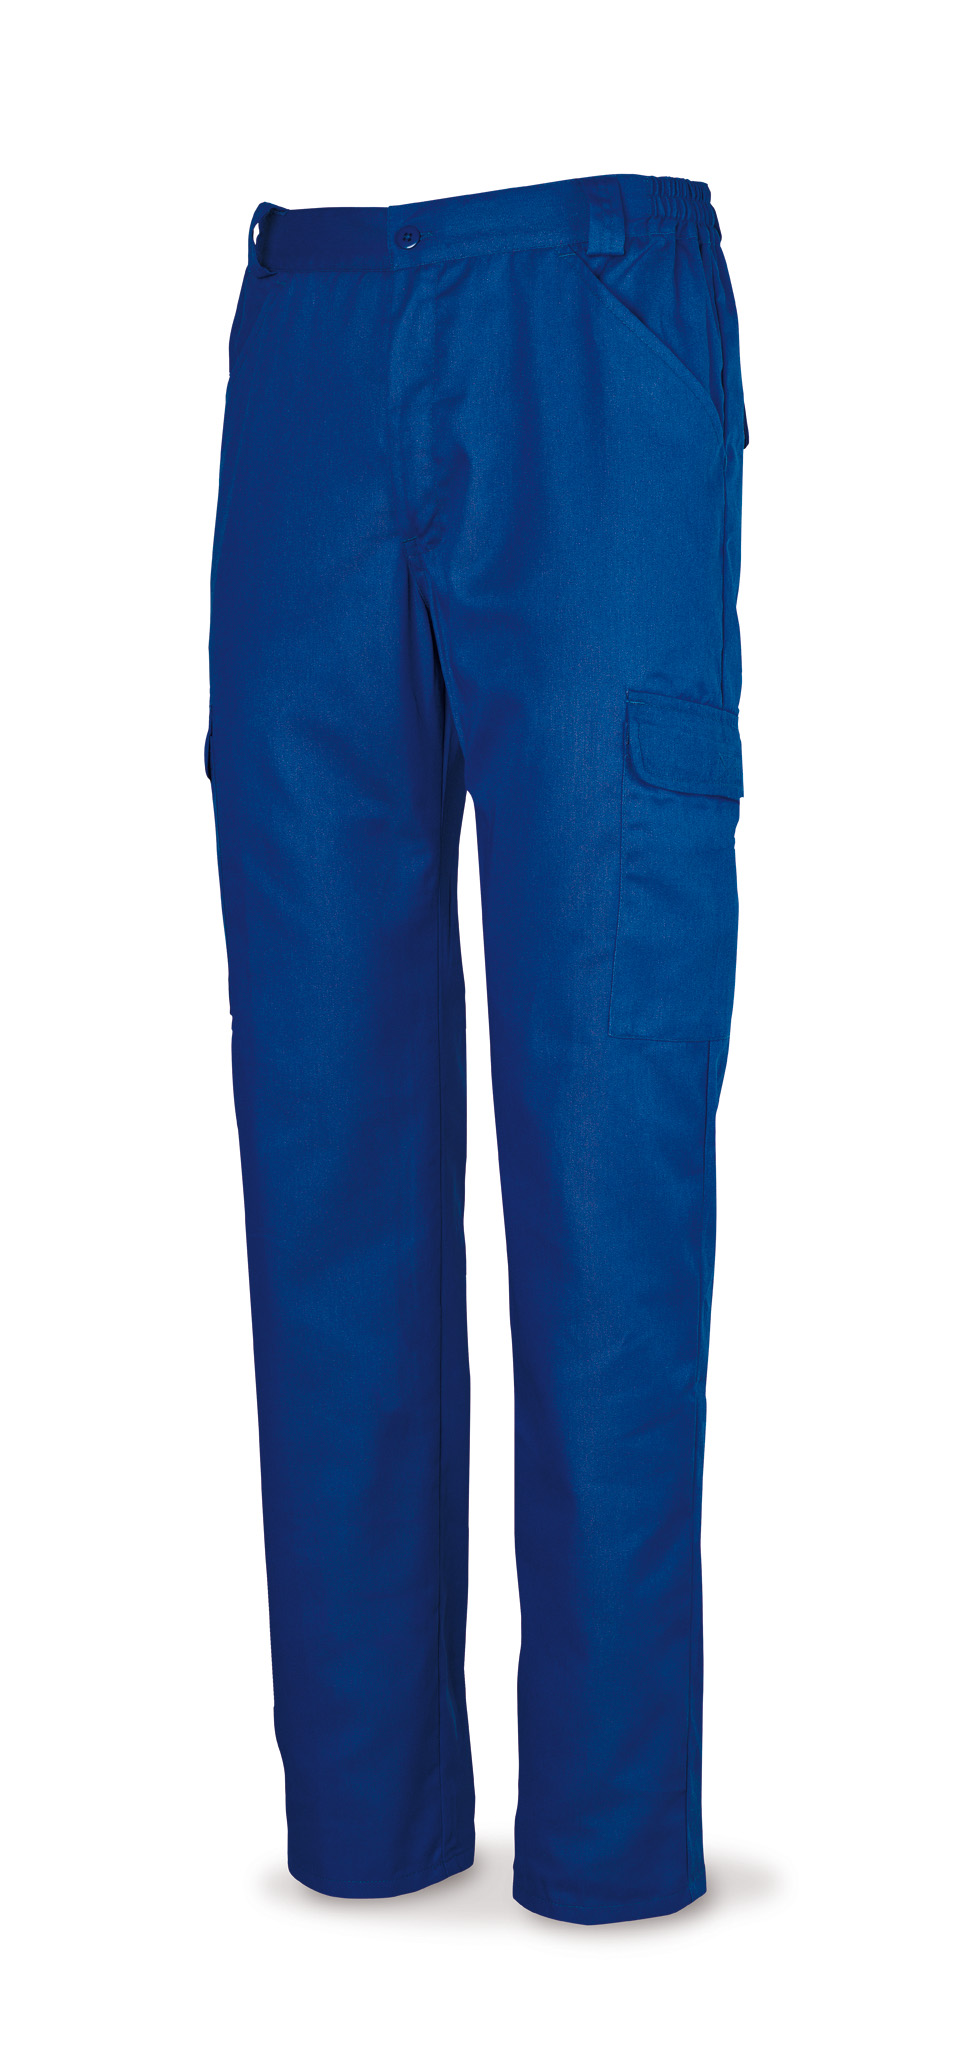 388-PE Workwear Basic Line Blue cotton pants 200 g. Multi-pockets.